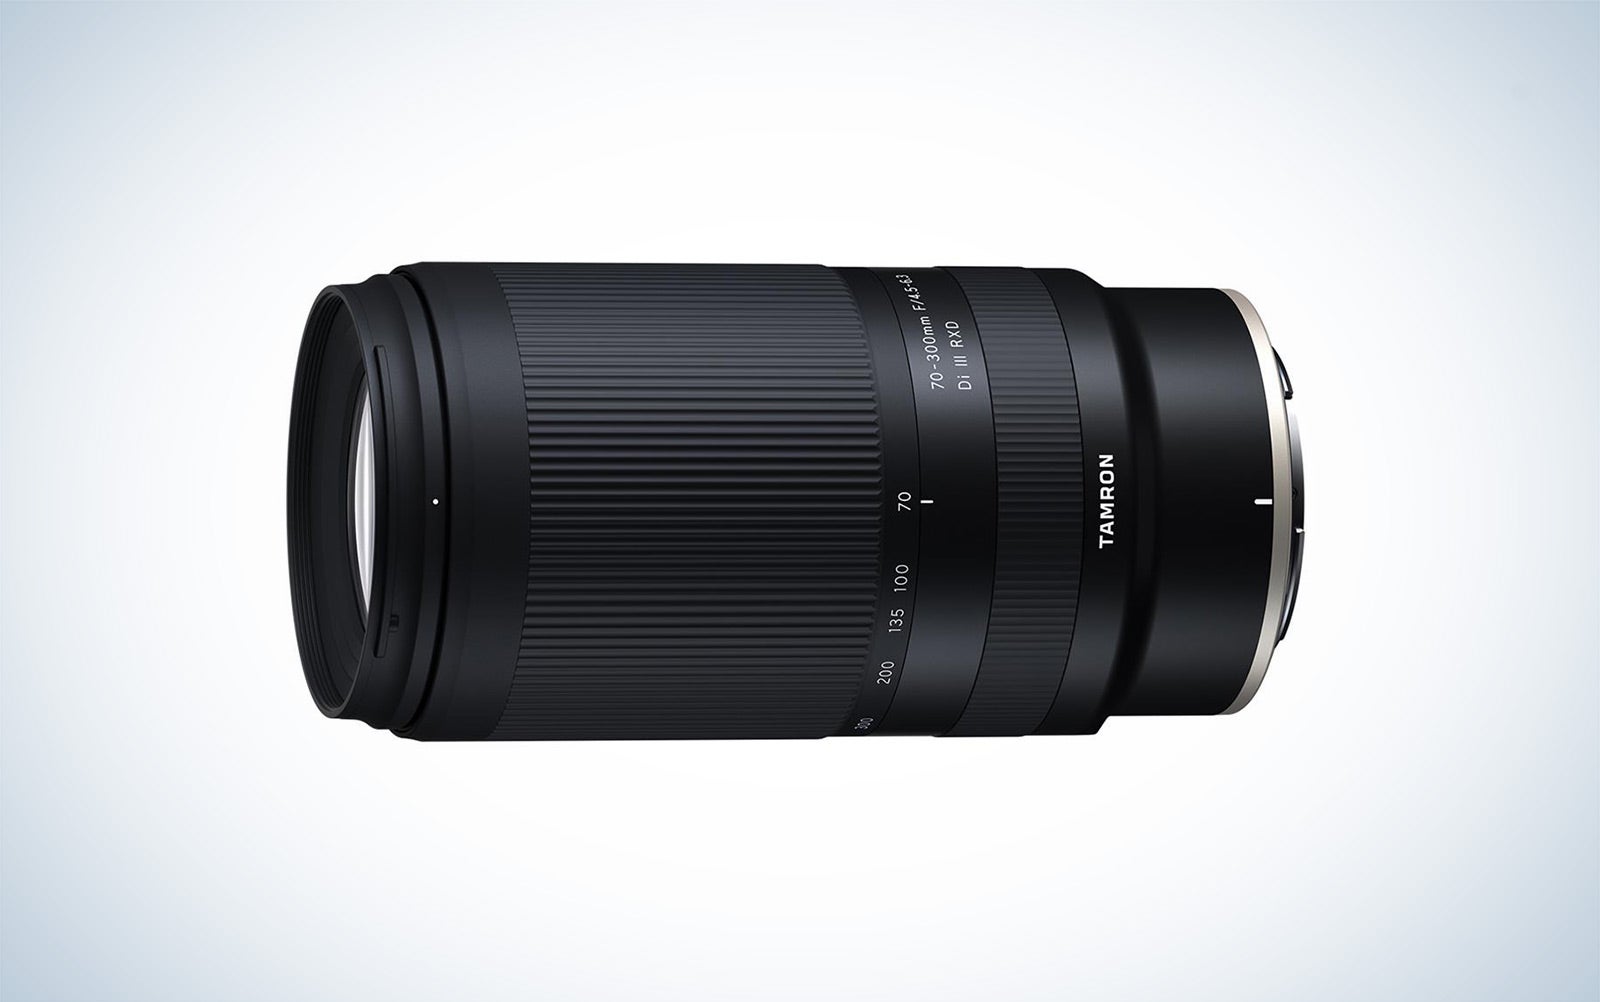 Tamron 70-300mm f/4.5-6.3 Di III RXD portrait lenses for Nikon